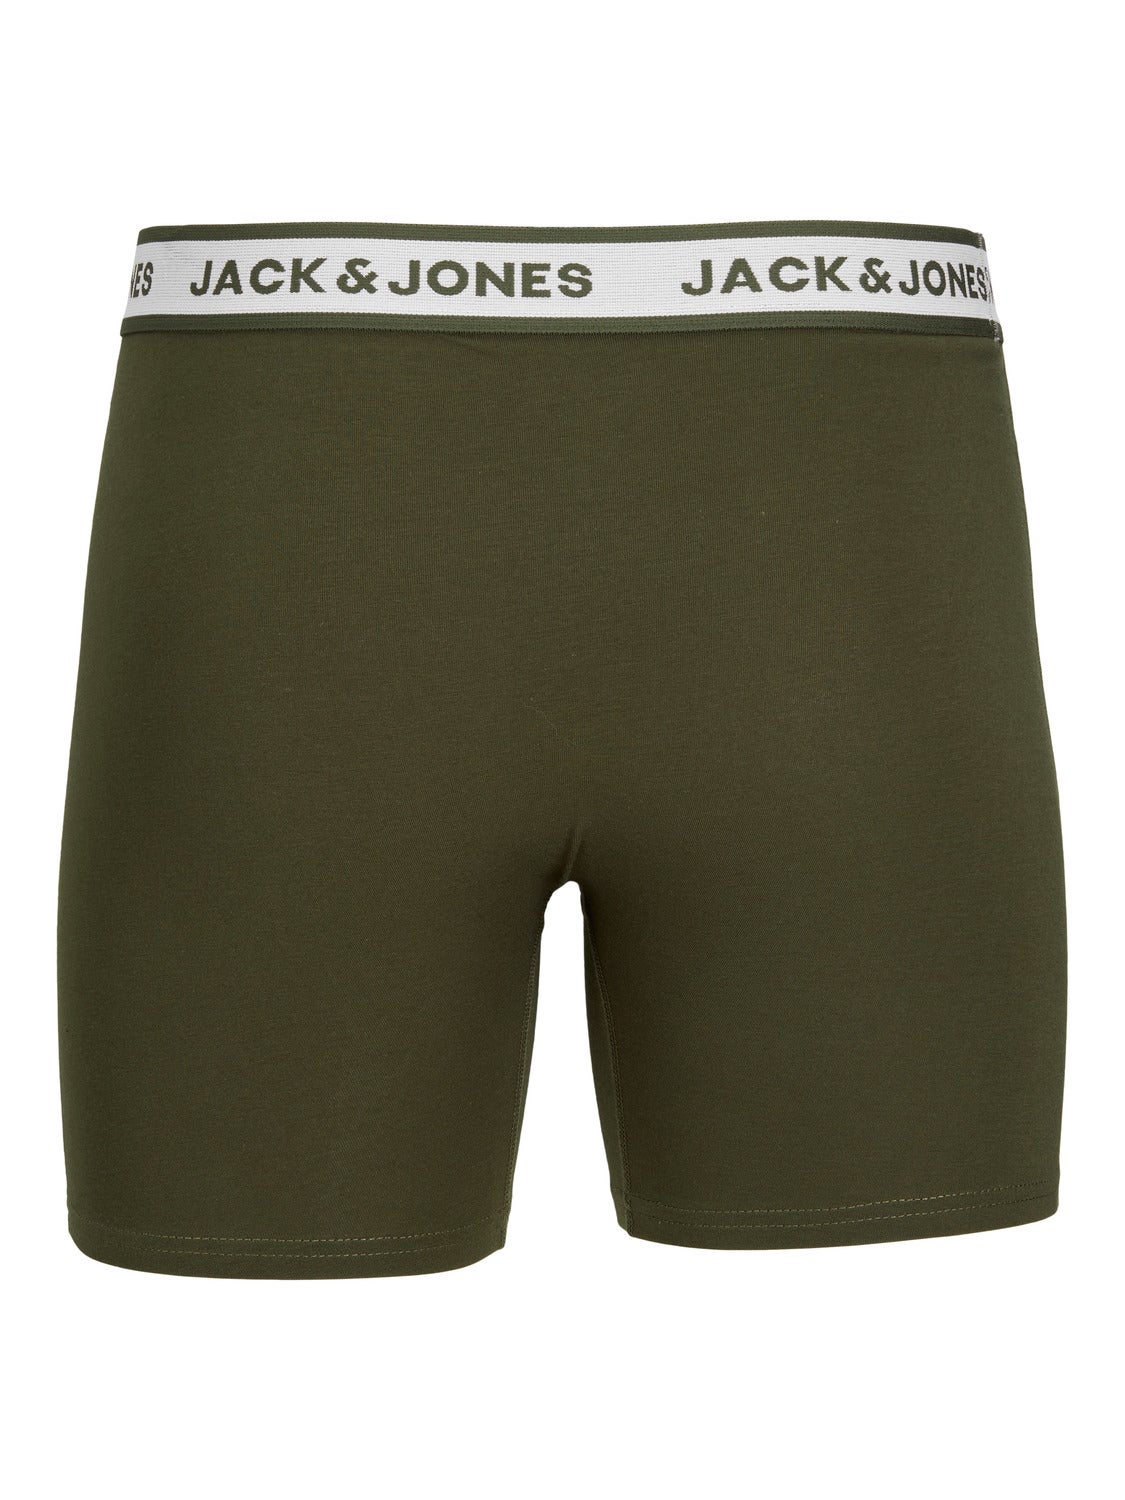 Aserlin Men's Underwear Boxer Briefs Cotton Huge Pouch Trunks Underwear 5  Pack-U-5Colors-S at  Men's Clothing store